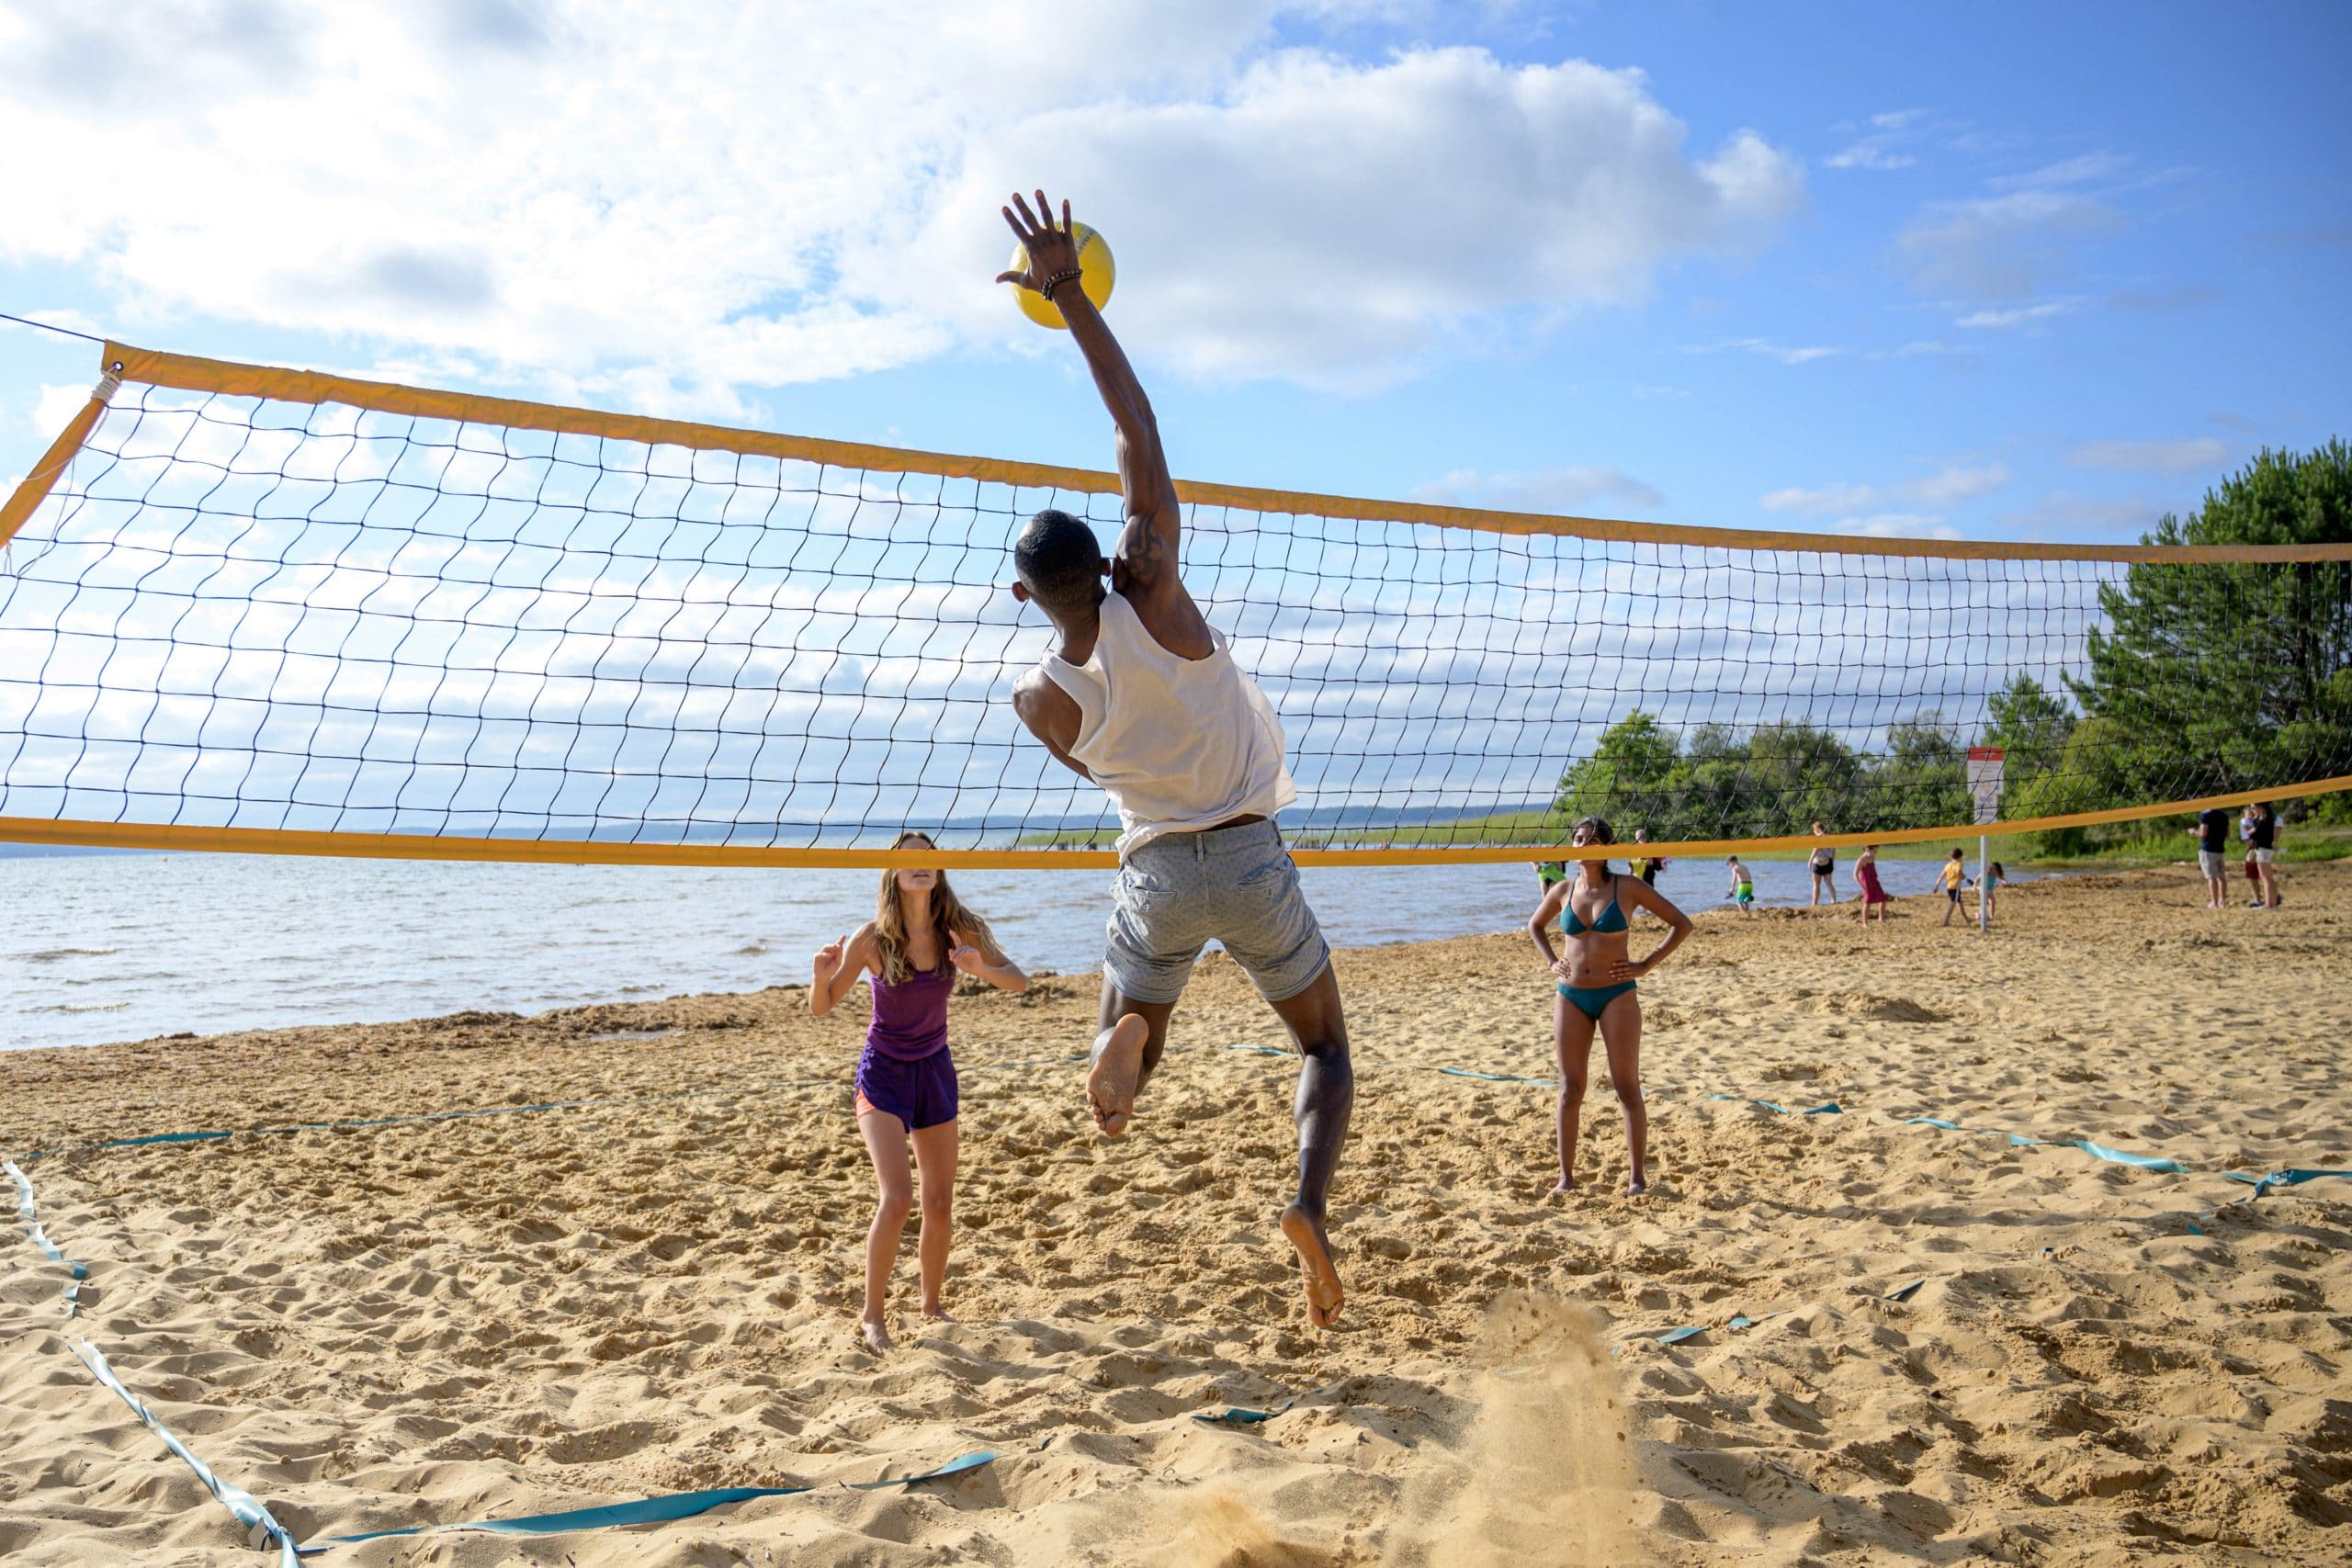  Beach-volley